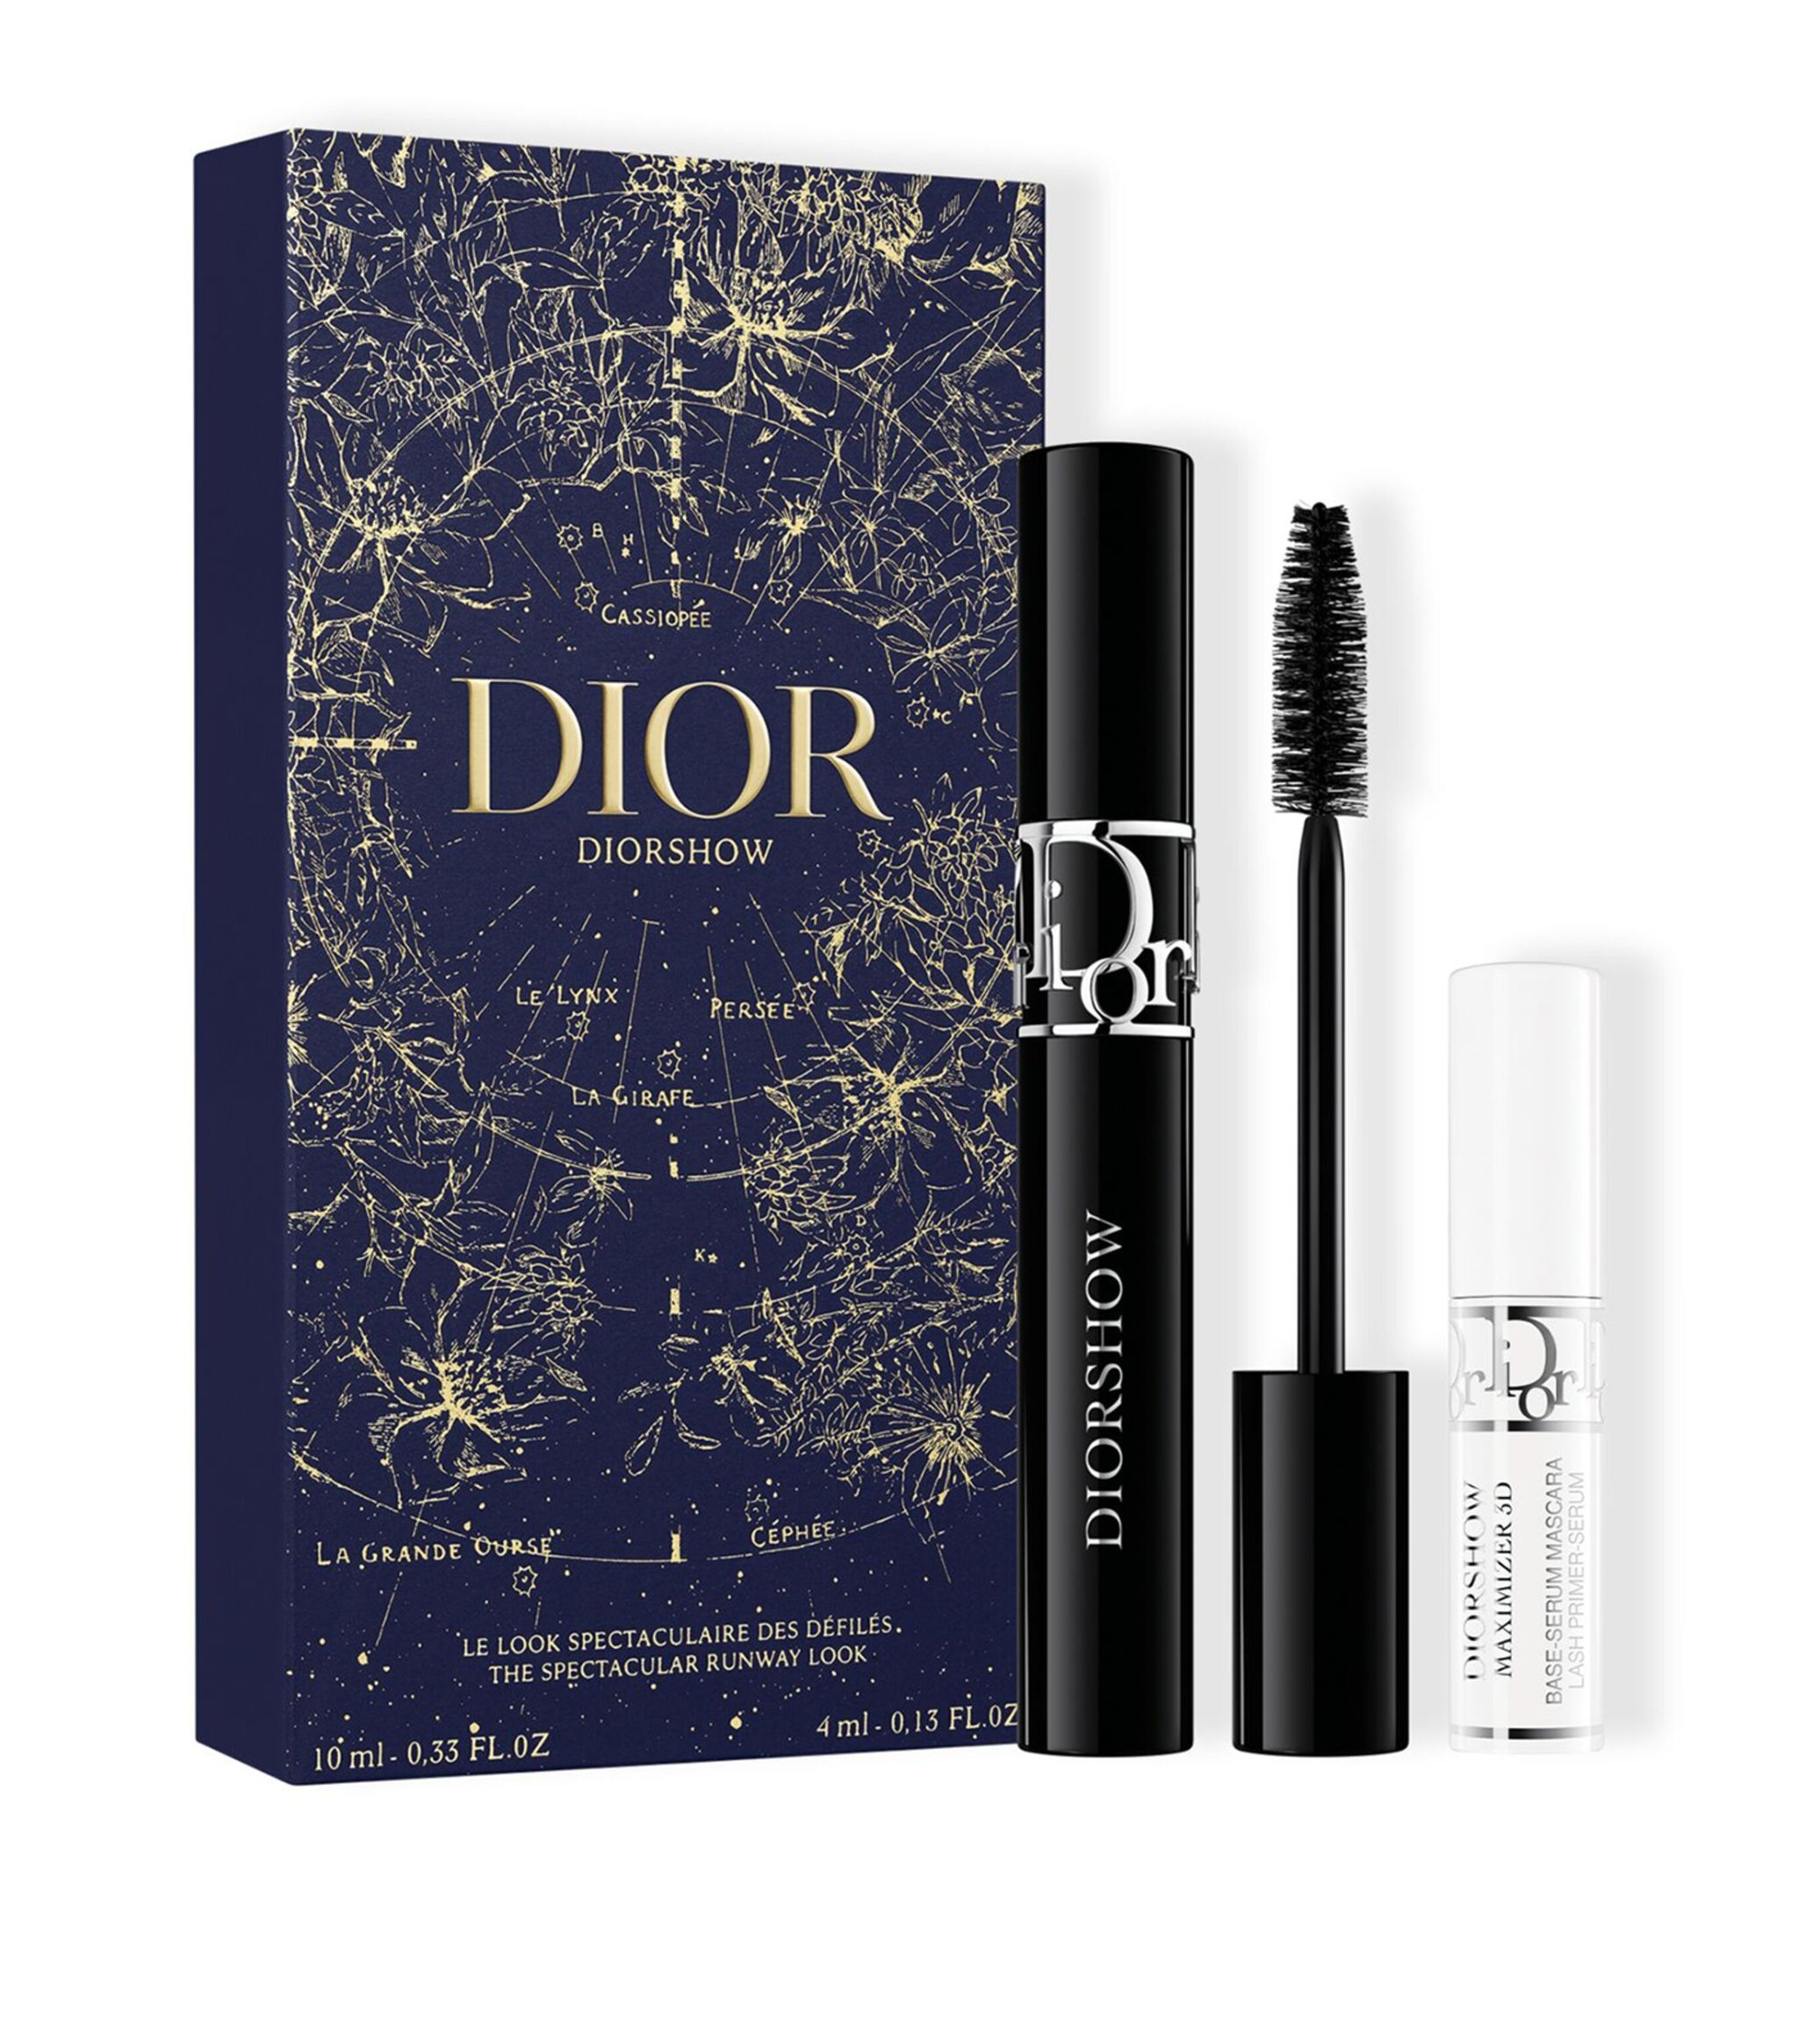 DIOR Diorshow Mascara Gift Set | Harrods US | Harrods